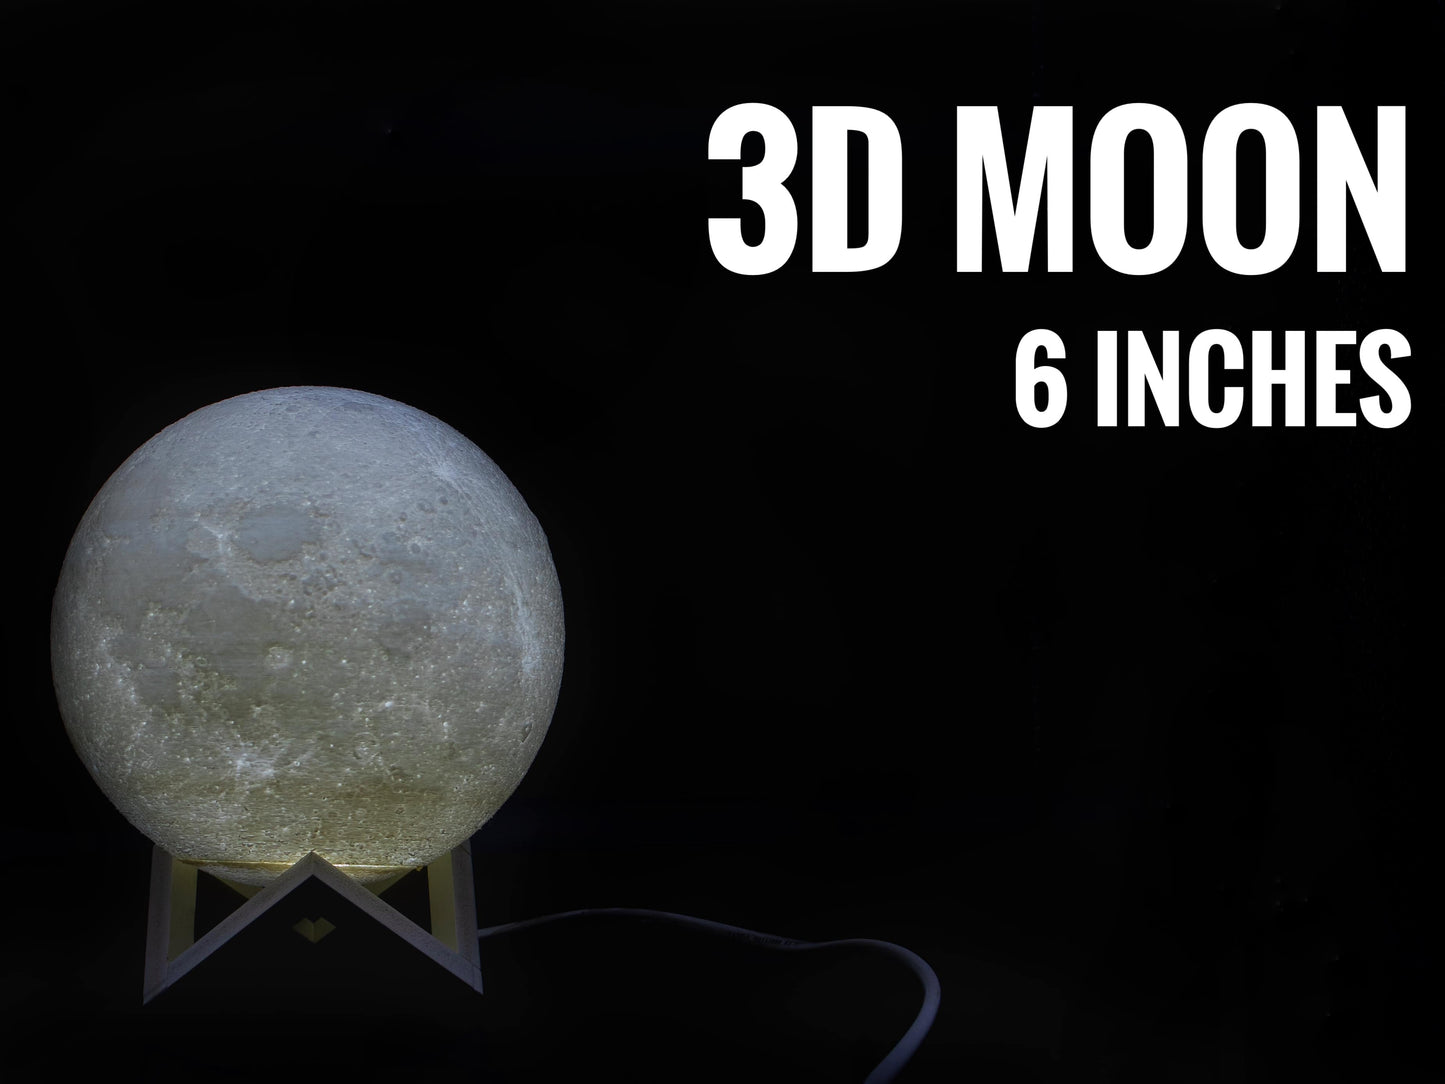 Photo Moon Lamp 3D Moon Shop